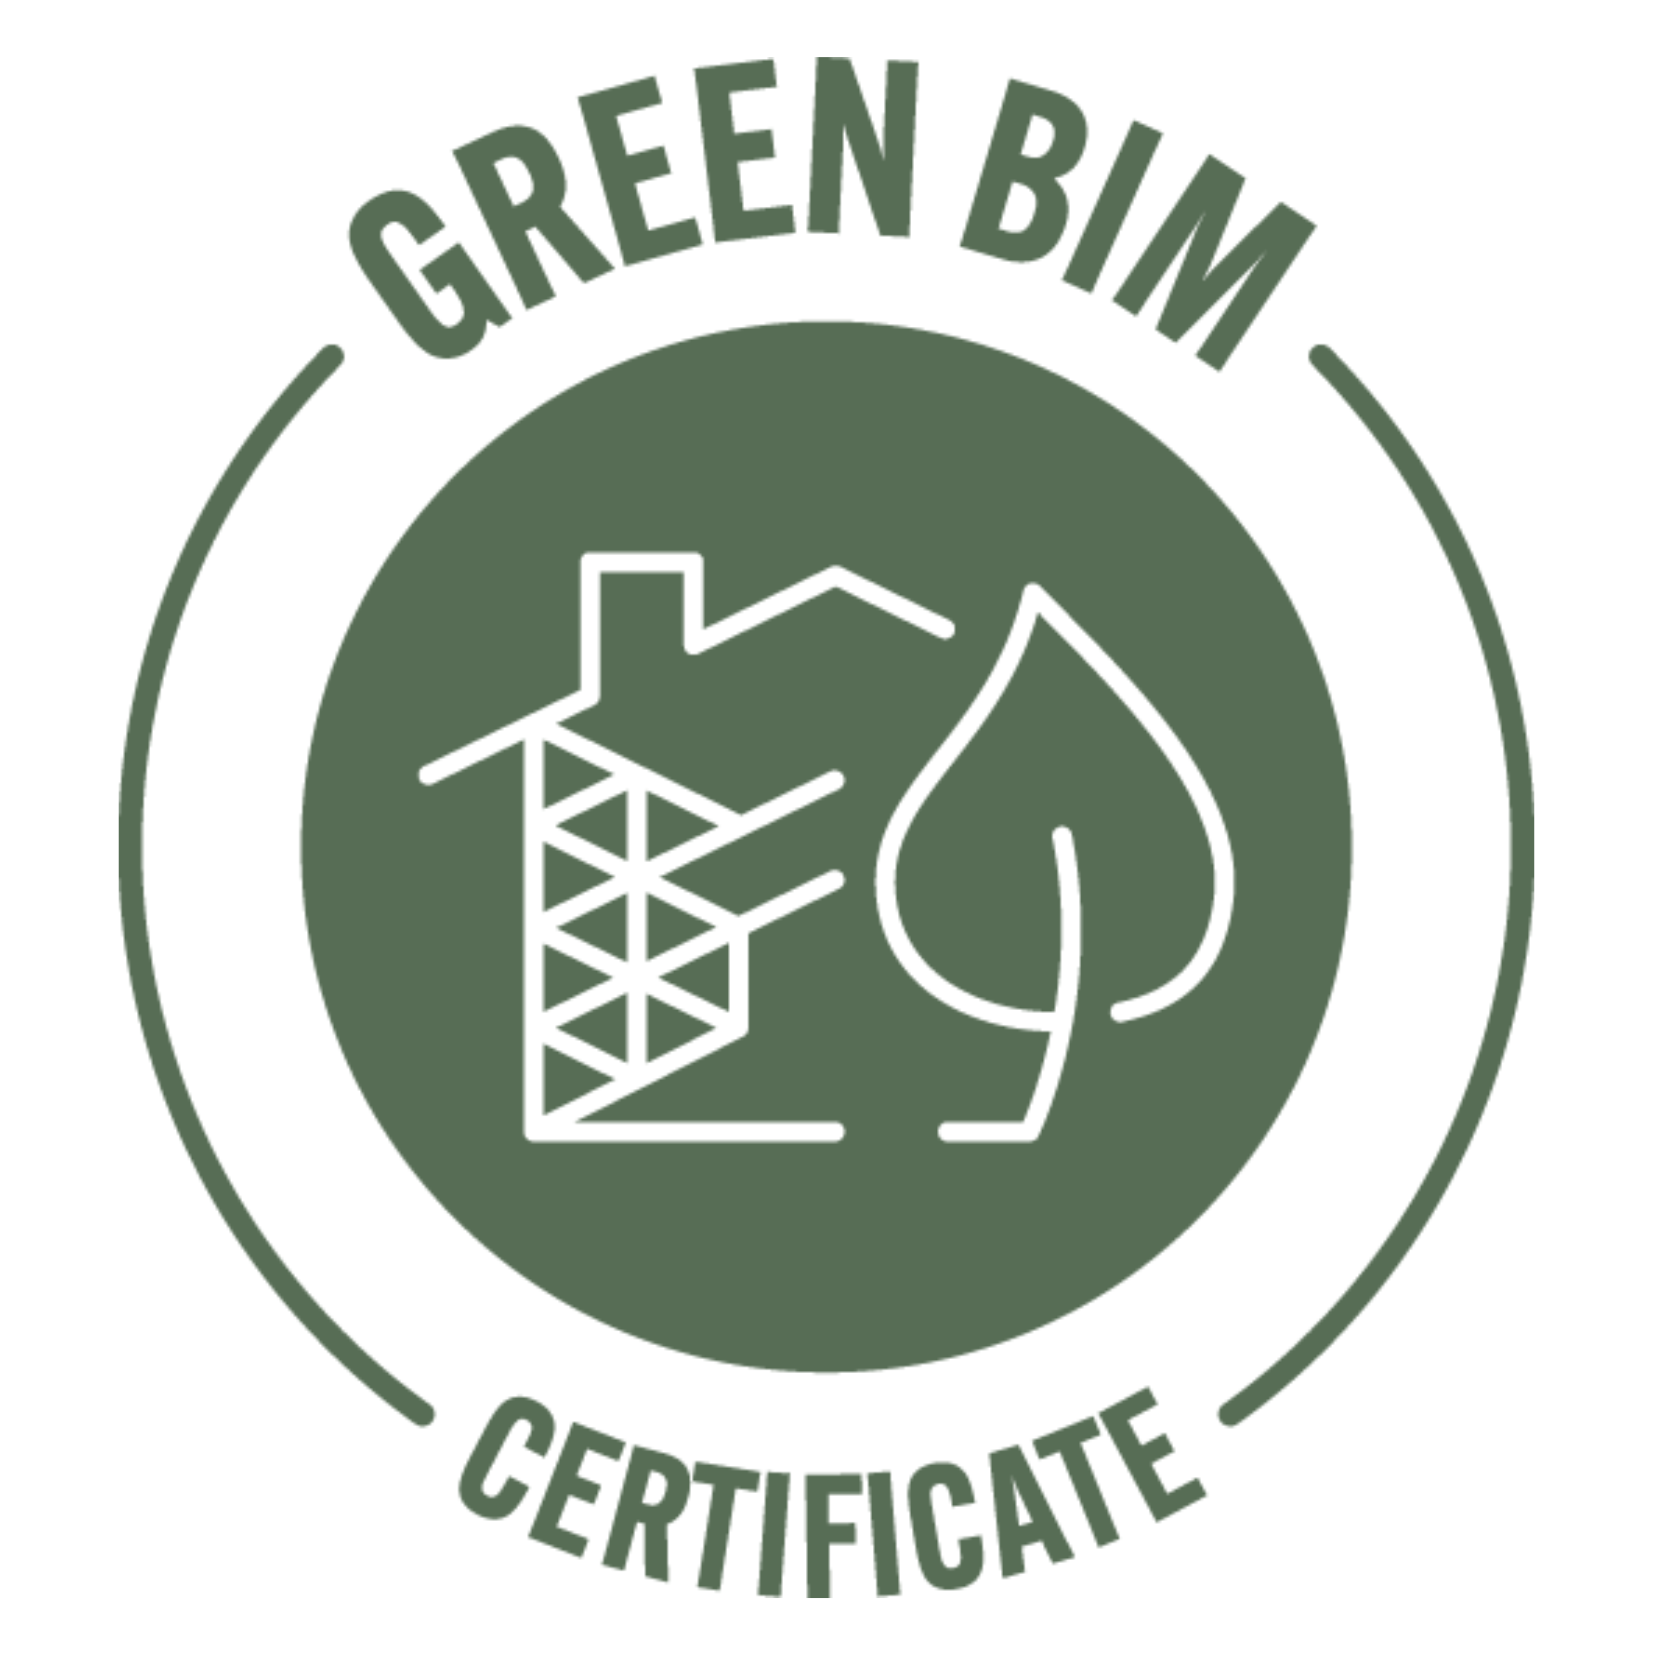 Green BIM Certificate icon